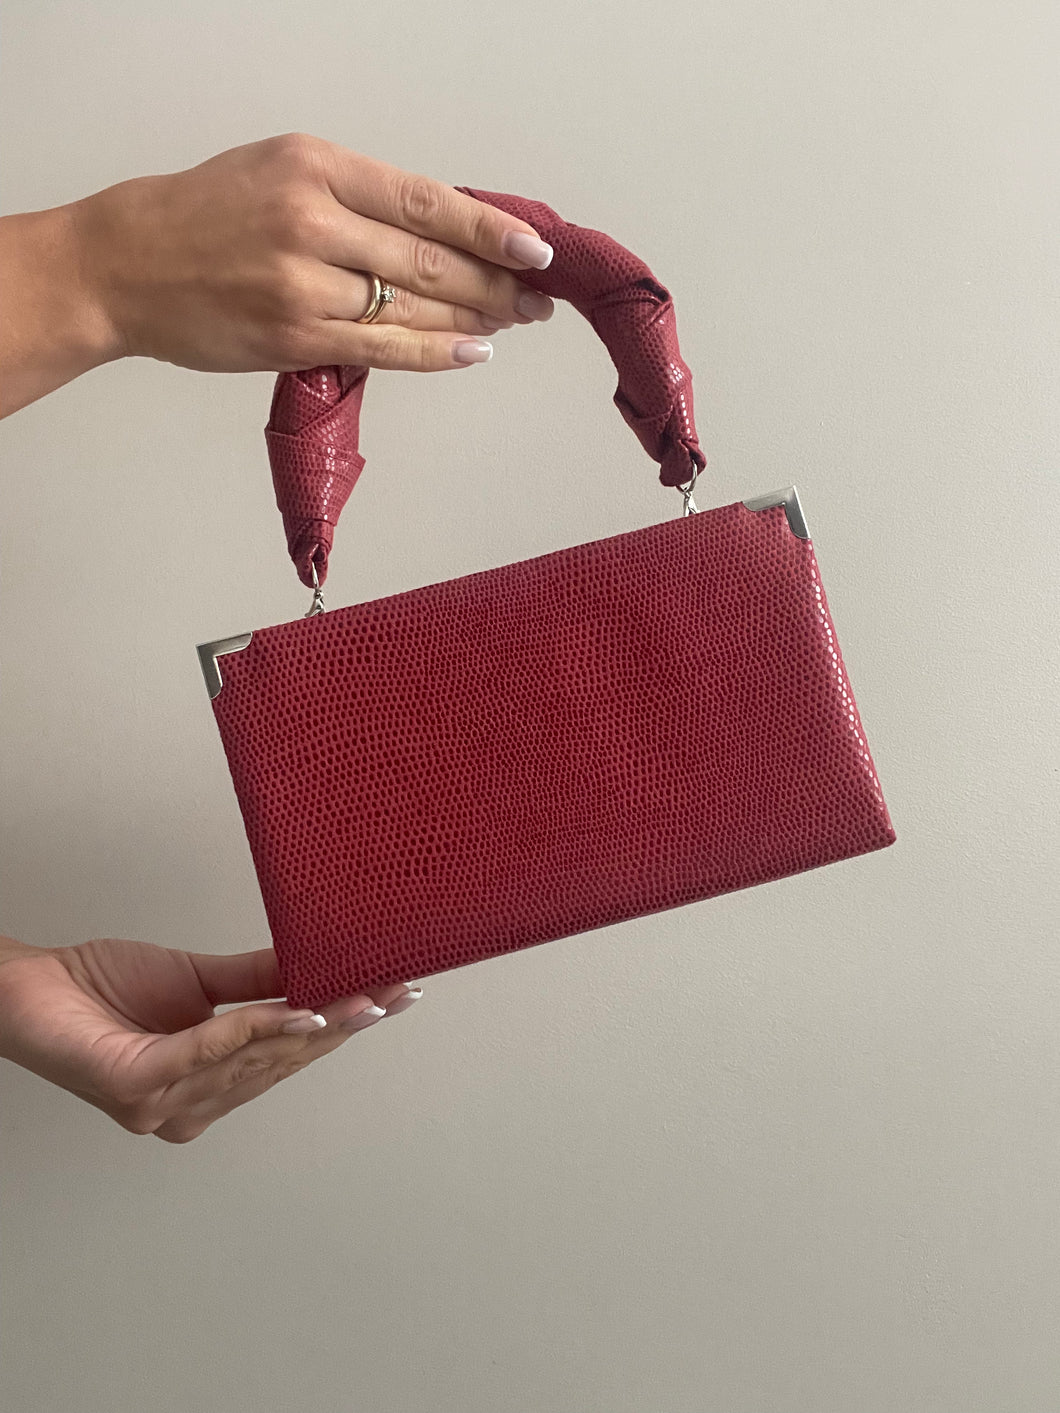 Mini handbag with handle - dark red version